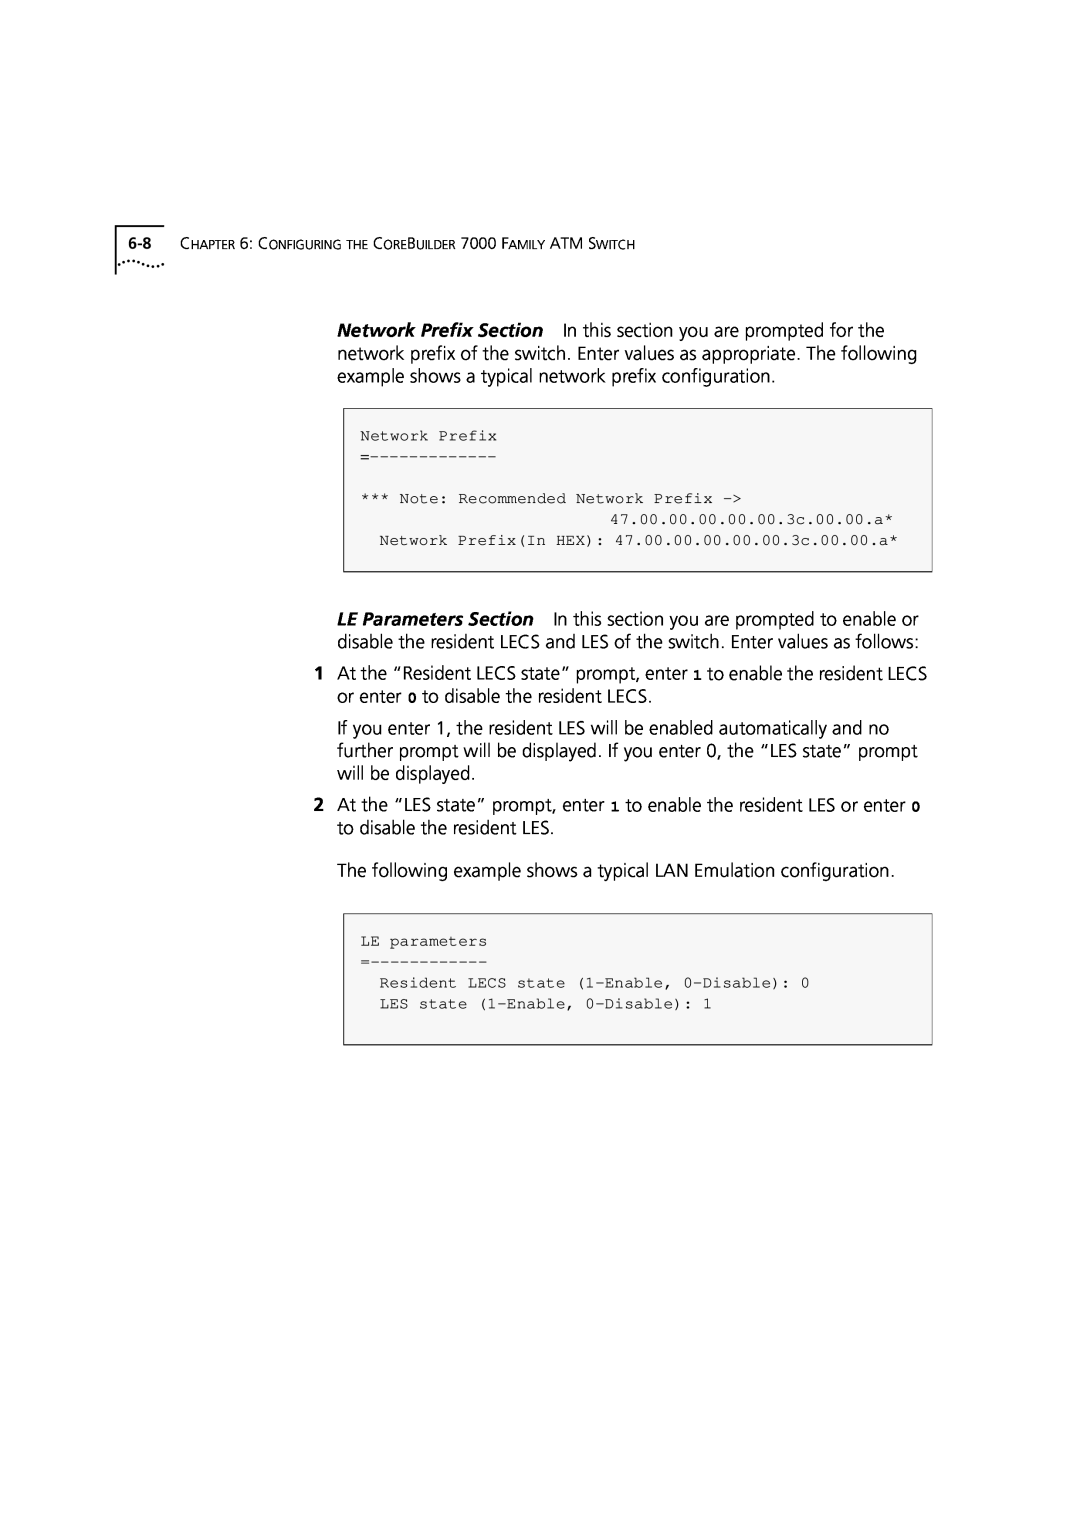 3Com DUA3700-0BAA04 manual The following example shows a typical LAN Emulation configuration 